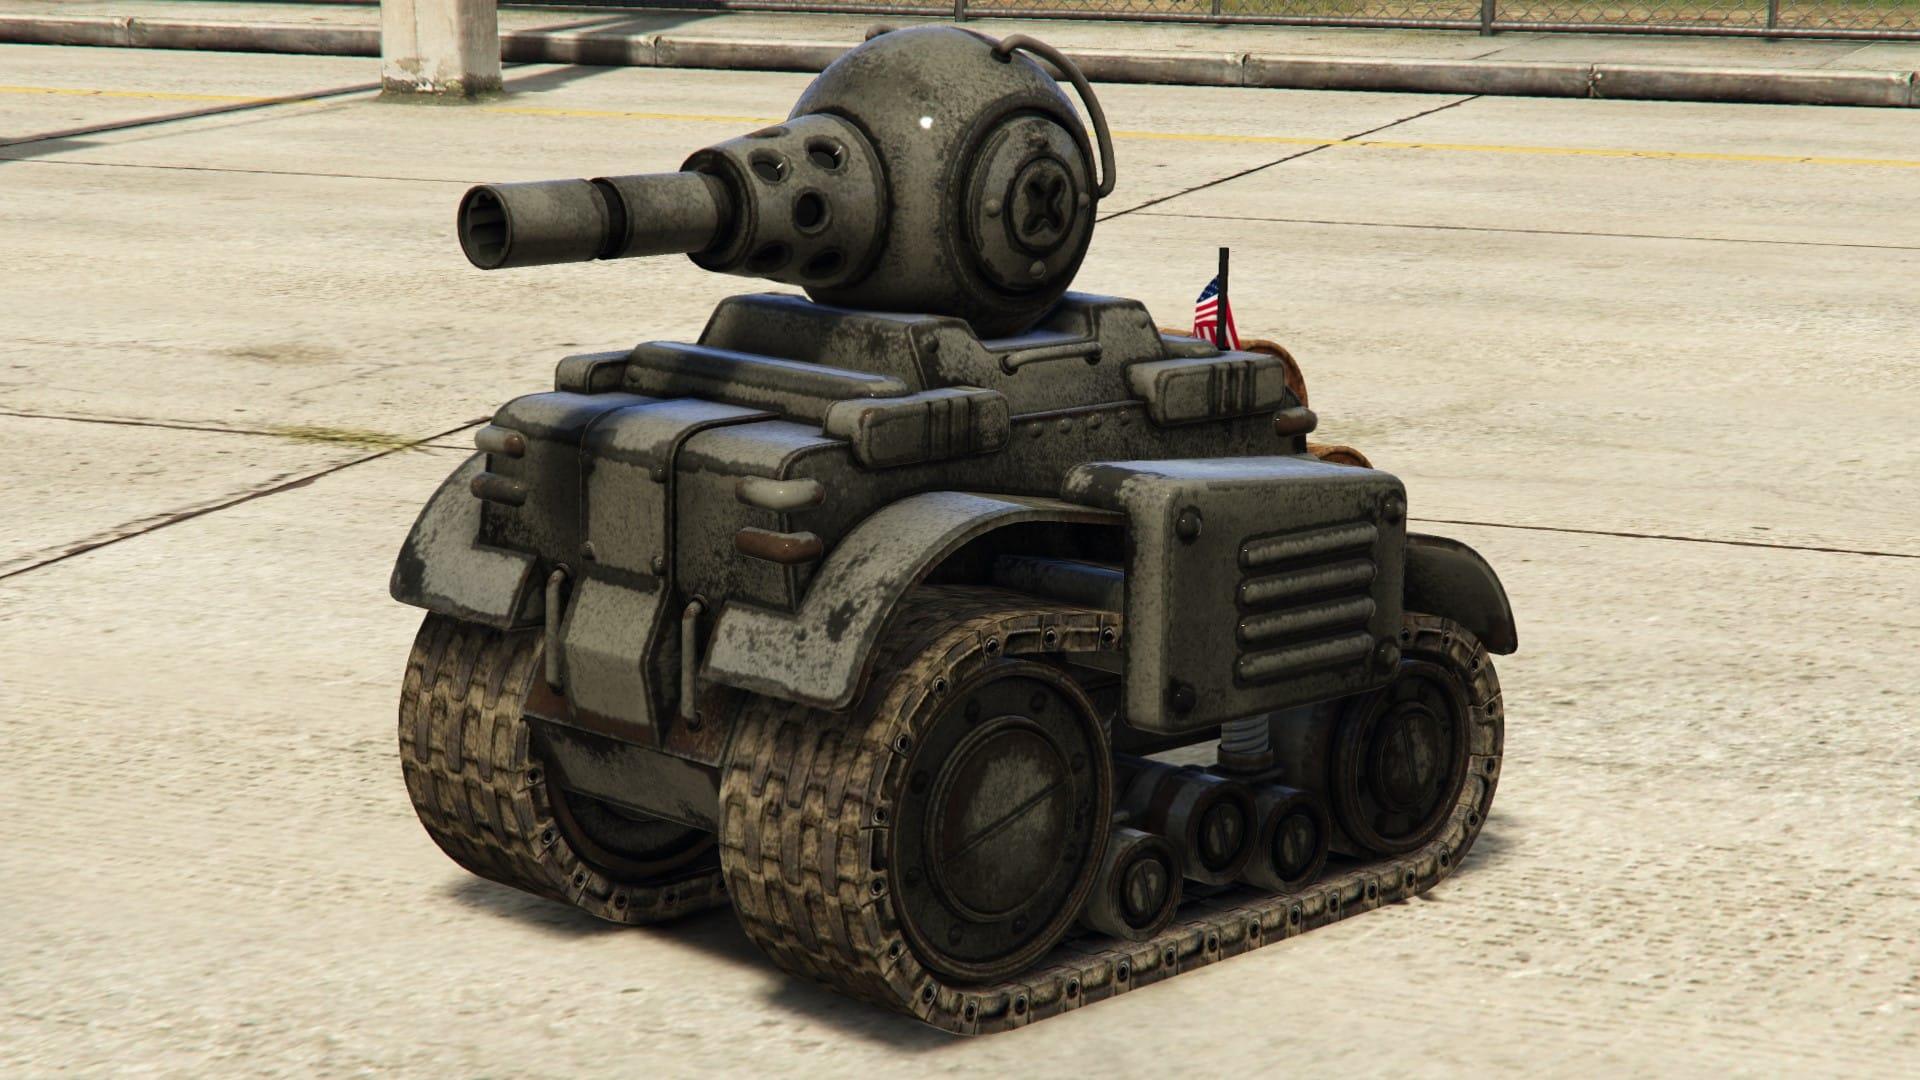 An RC Tank in GTA V